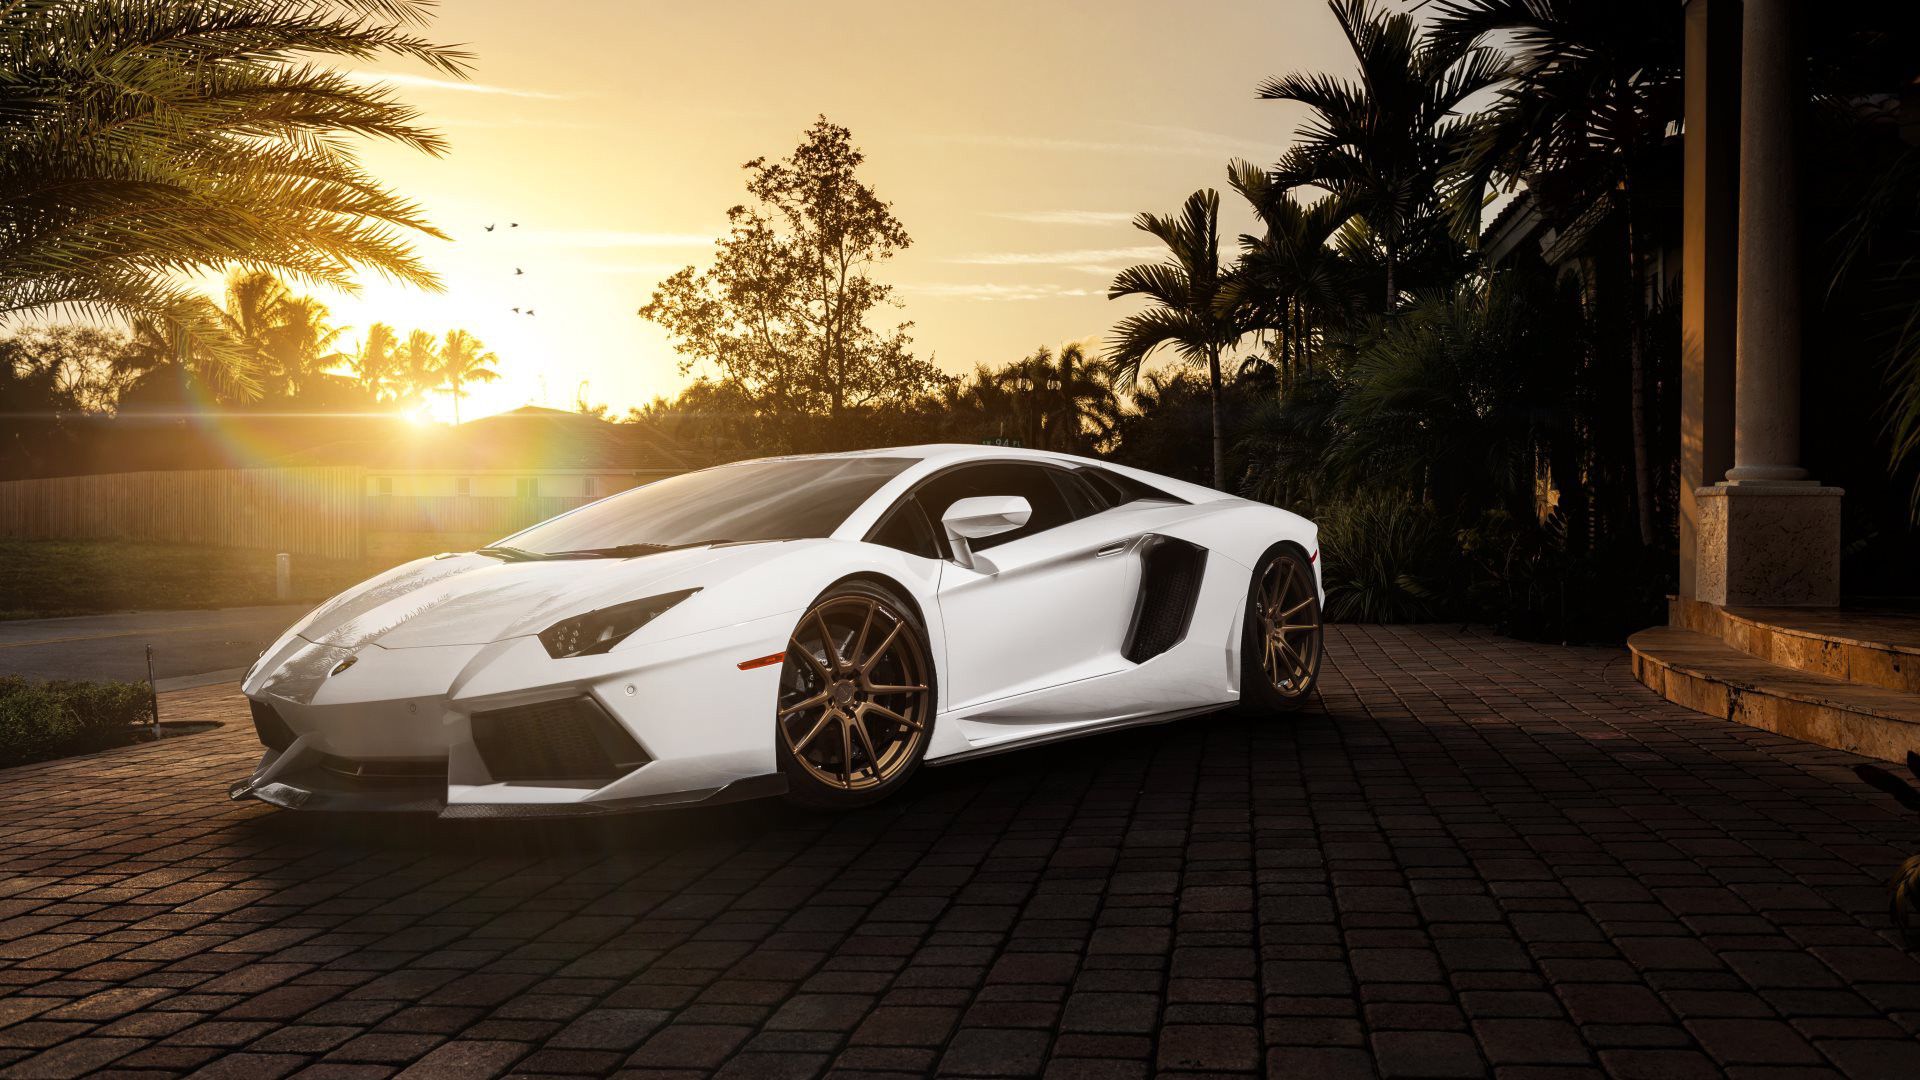 Lamborghini Gallardo Wallpaper free download